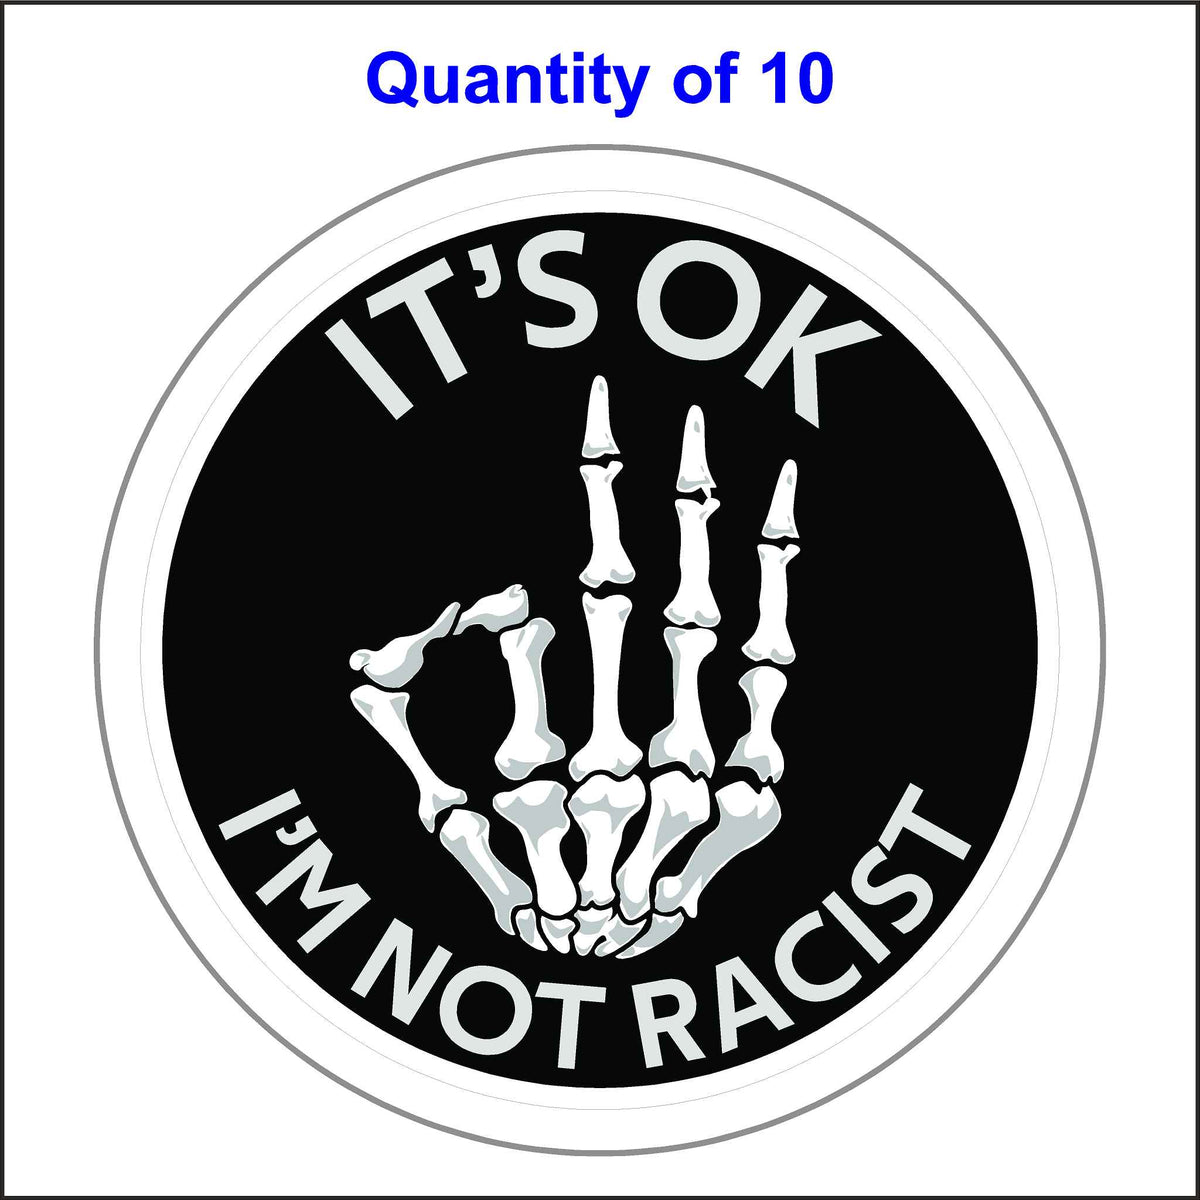 Comedic Skeleton Hand, It’s Okay I’m Not Racist Sticker With the Okay Symbol. 10 Quantity.